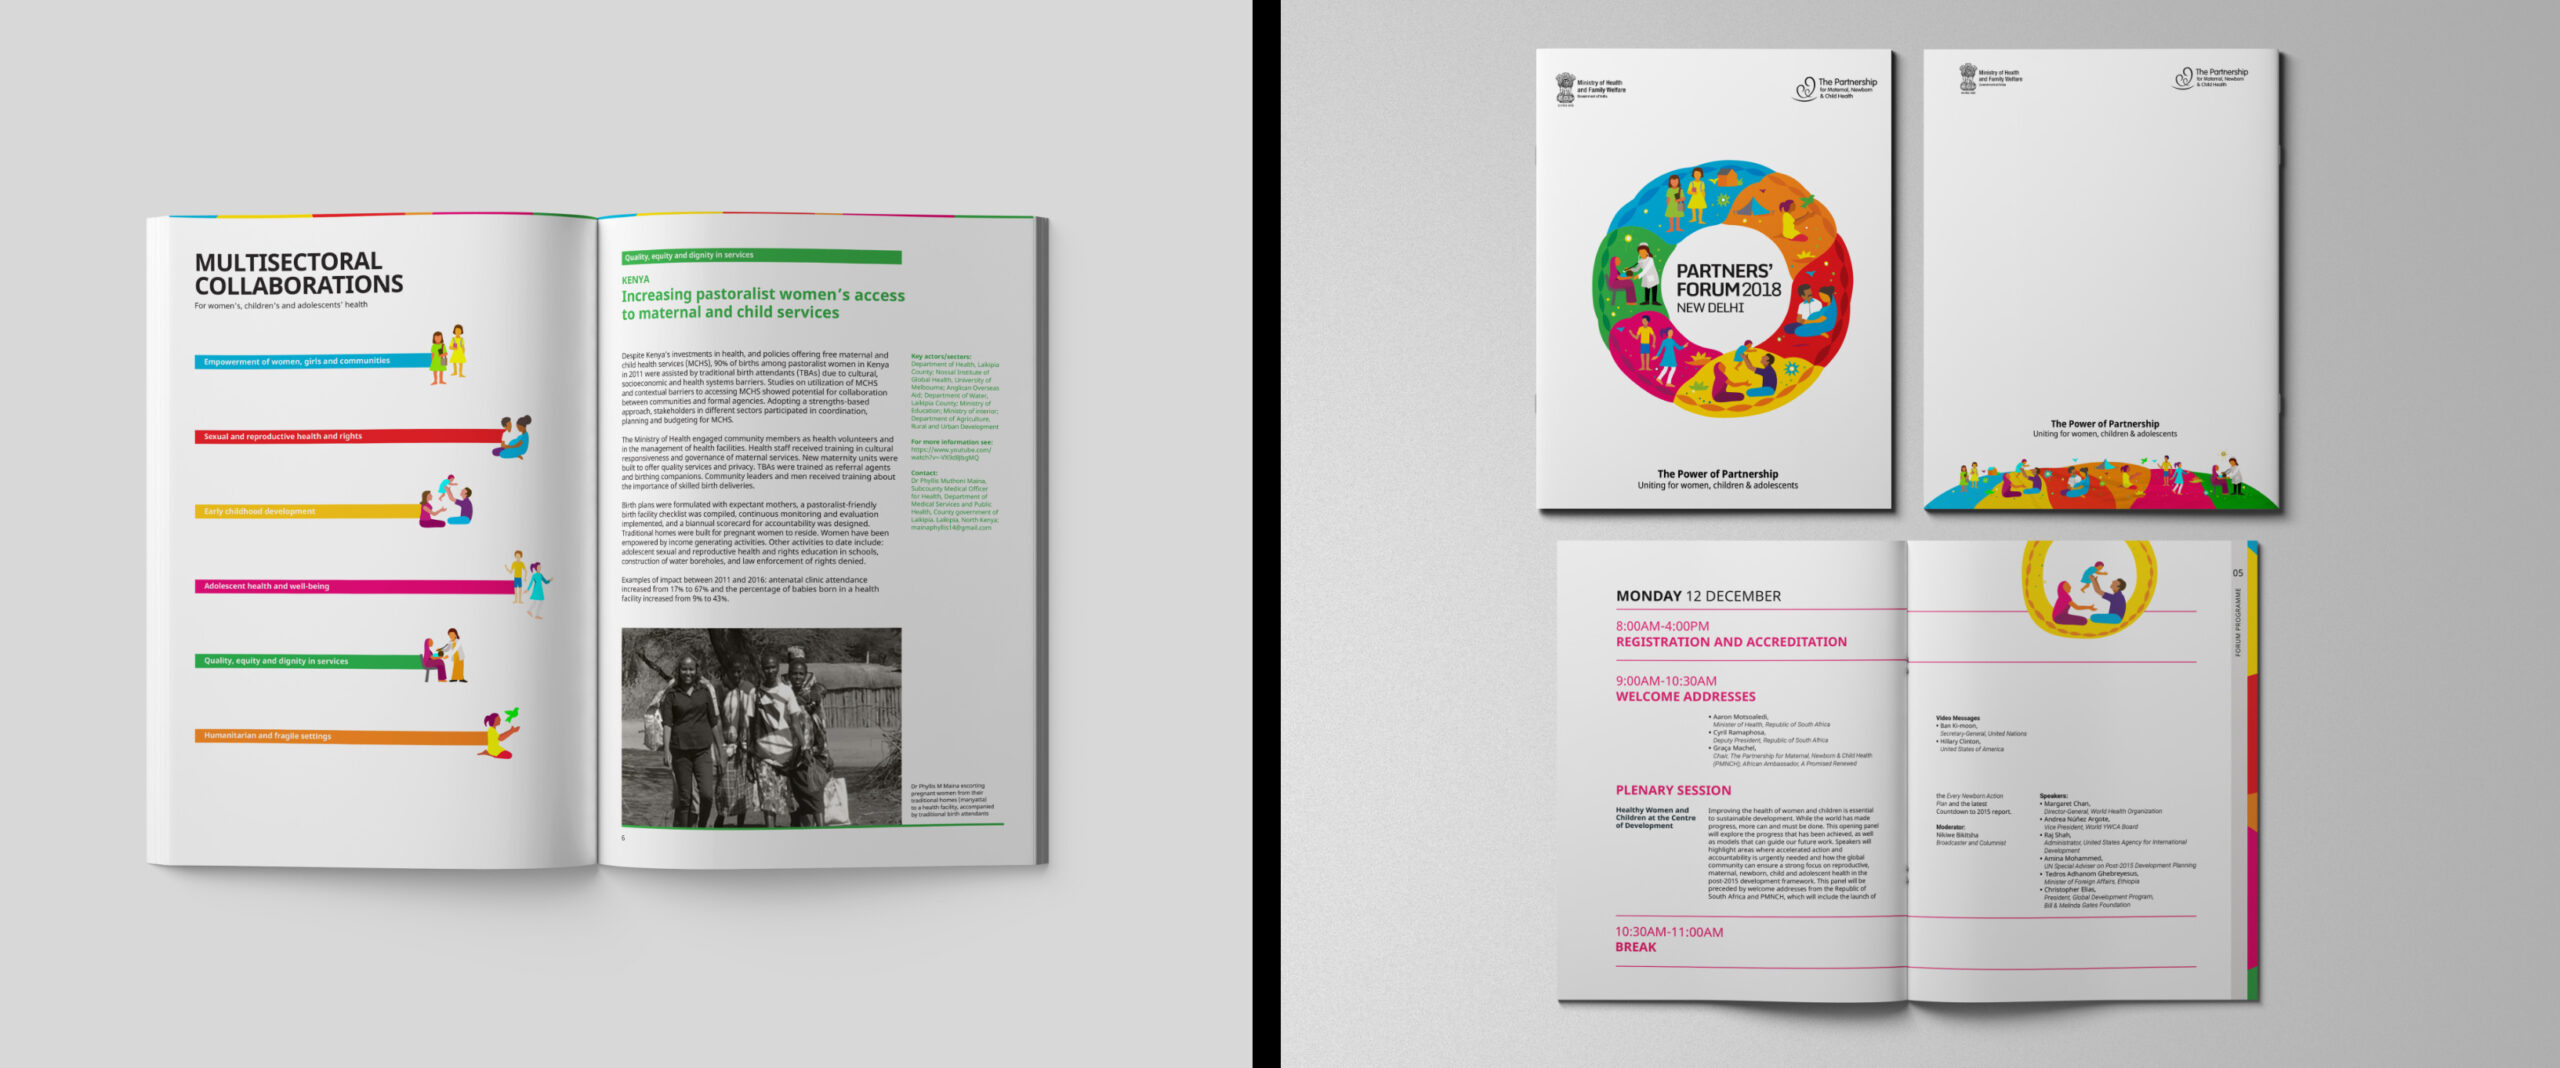 lopez-design-partner-forum-2018-branding-editorial-design-book-cover-with-illustration